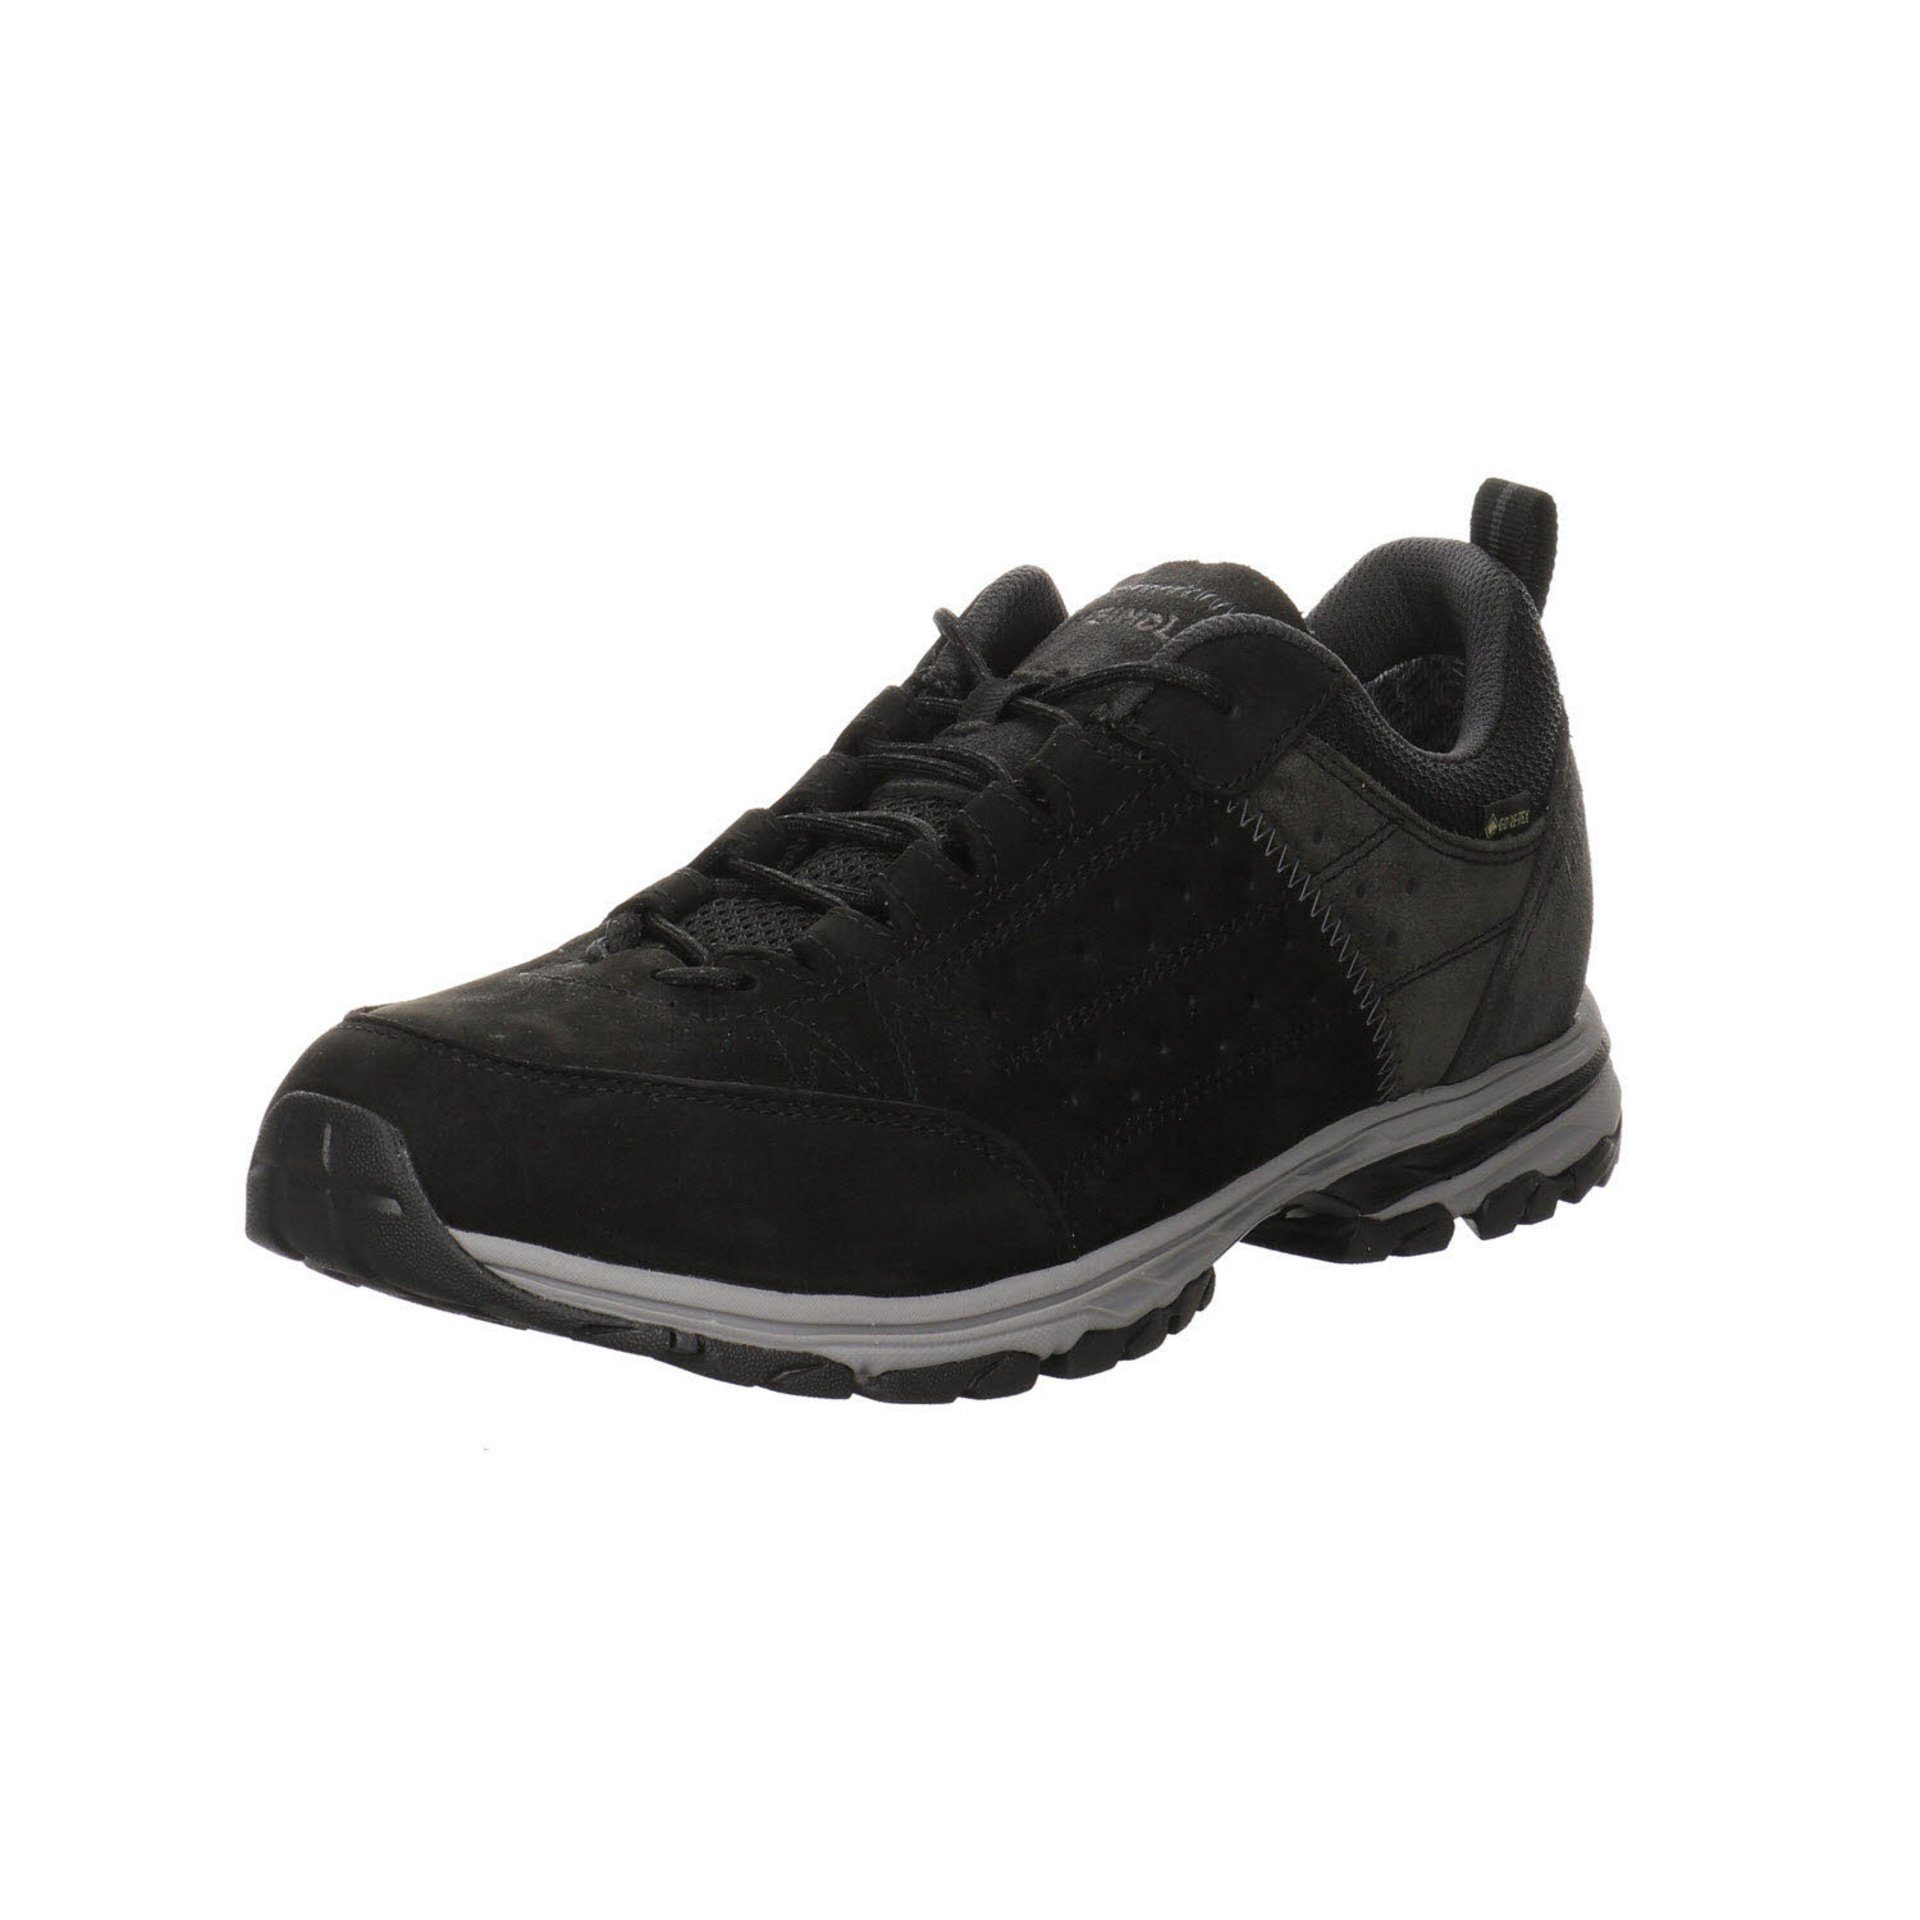 Meindl Herren Outdoor Schuhe Durban GTX Outdoorschuh Outdoorschuh Leder-/Textilkombination schwarz dunkel